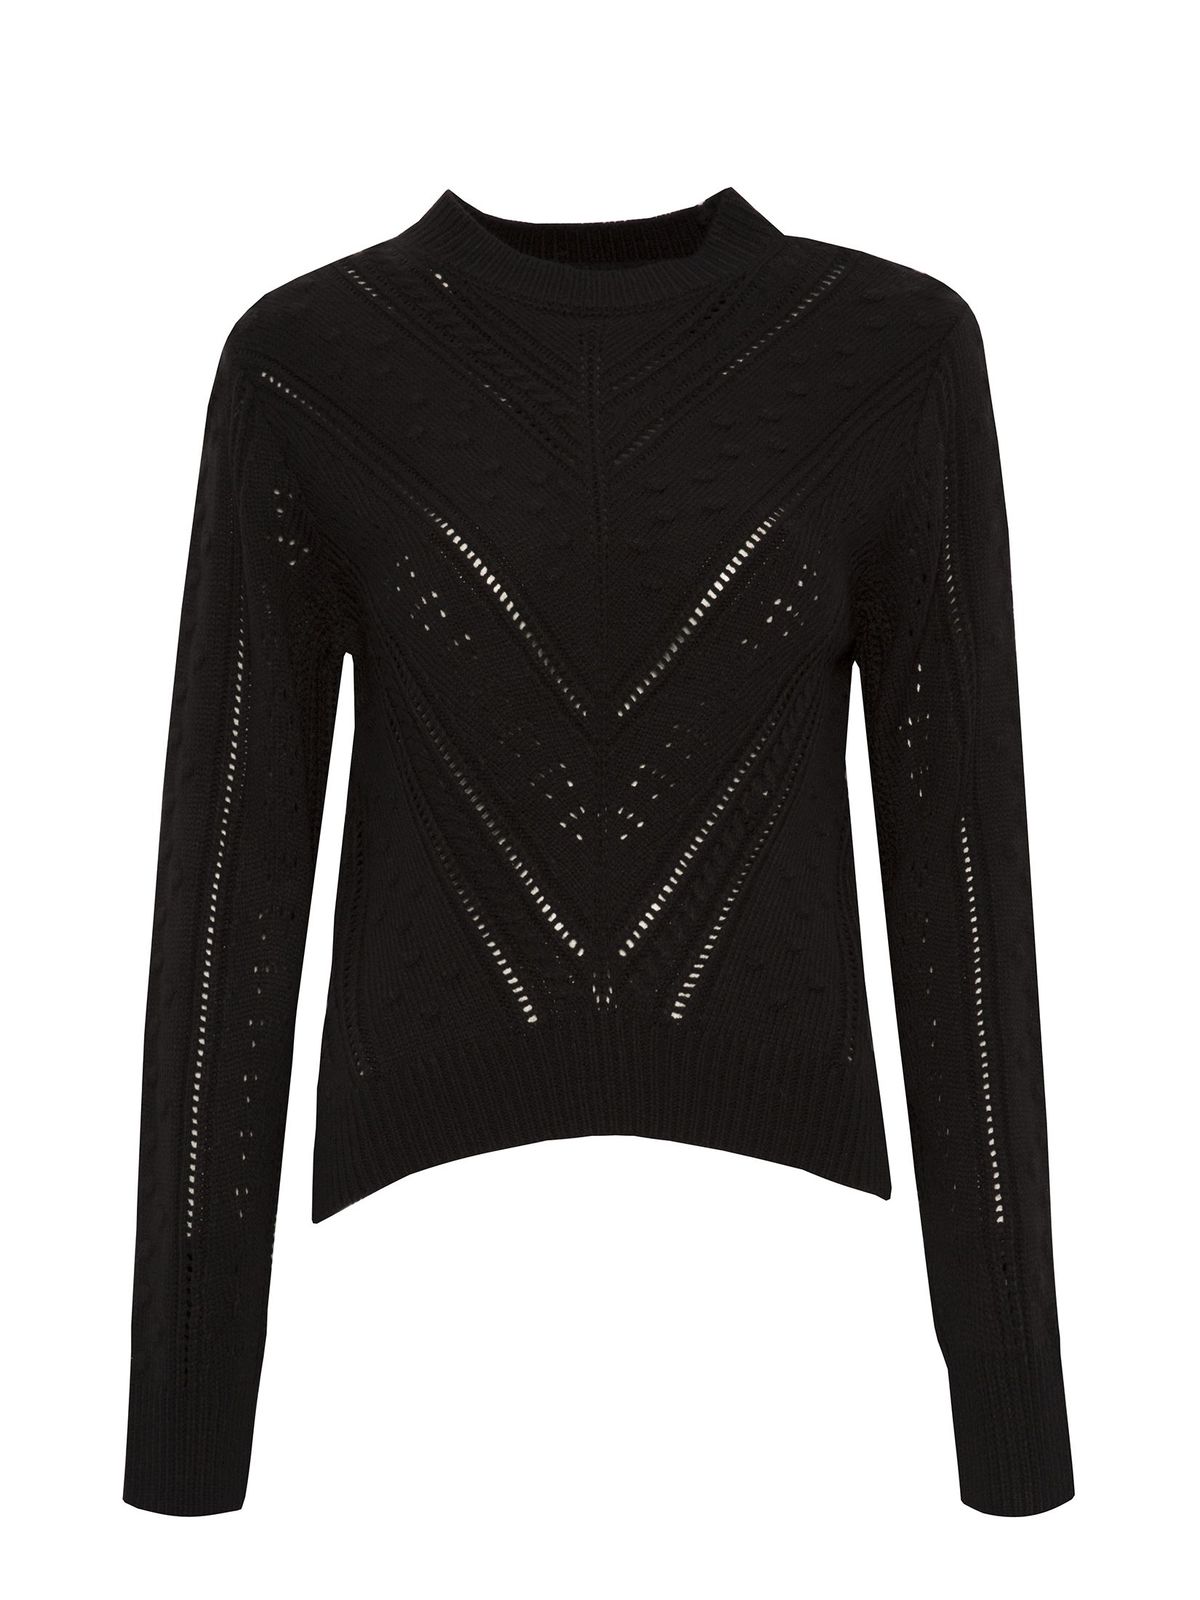 Pulover din tricot cu model crosetat negru cu croi larg - Top Secret 6 - StarShinerS.ro